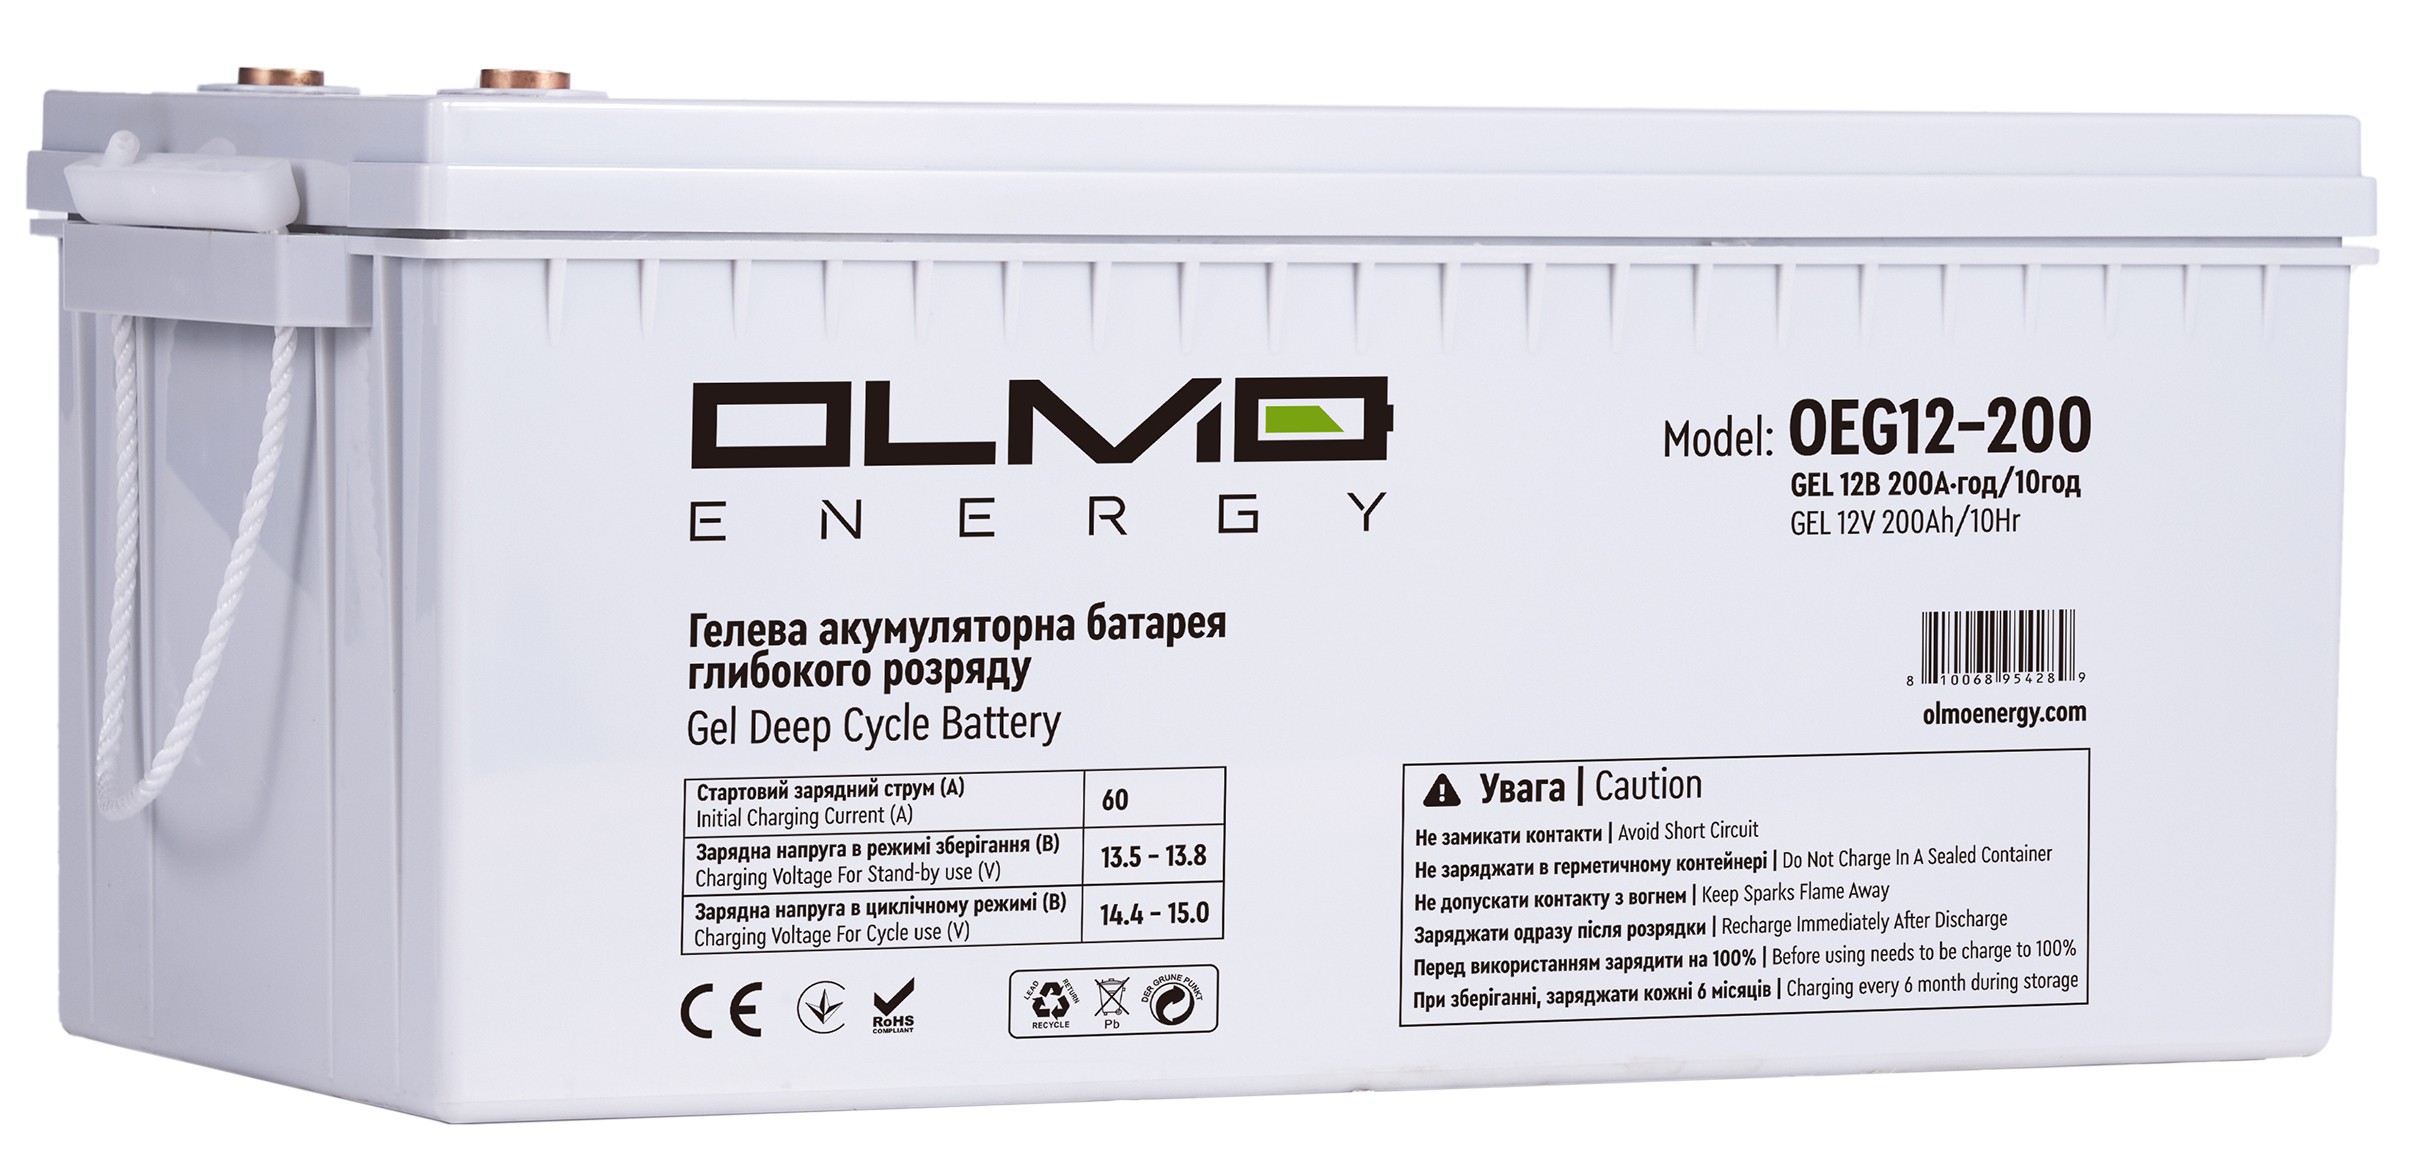 Акумуляторна батарея OLMO Energy OEG12-200 в інтернет-магазині, головне фото